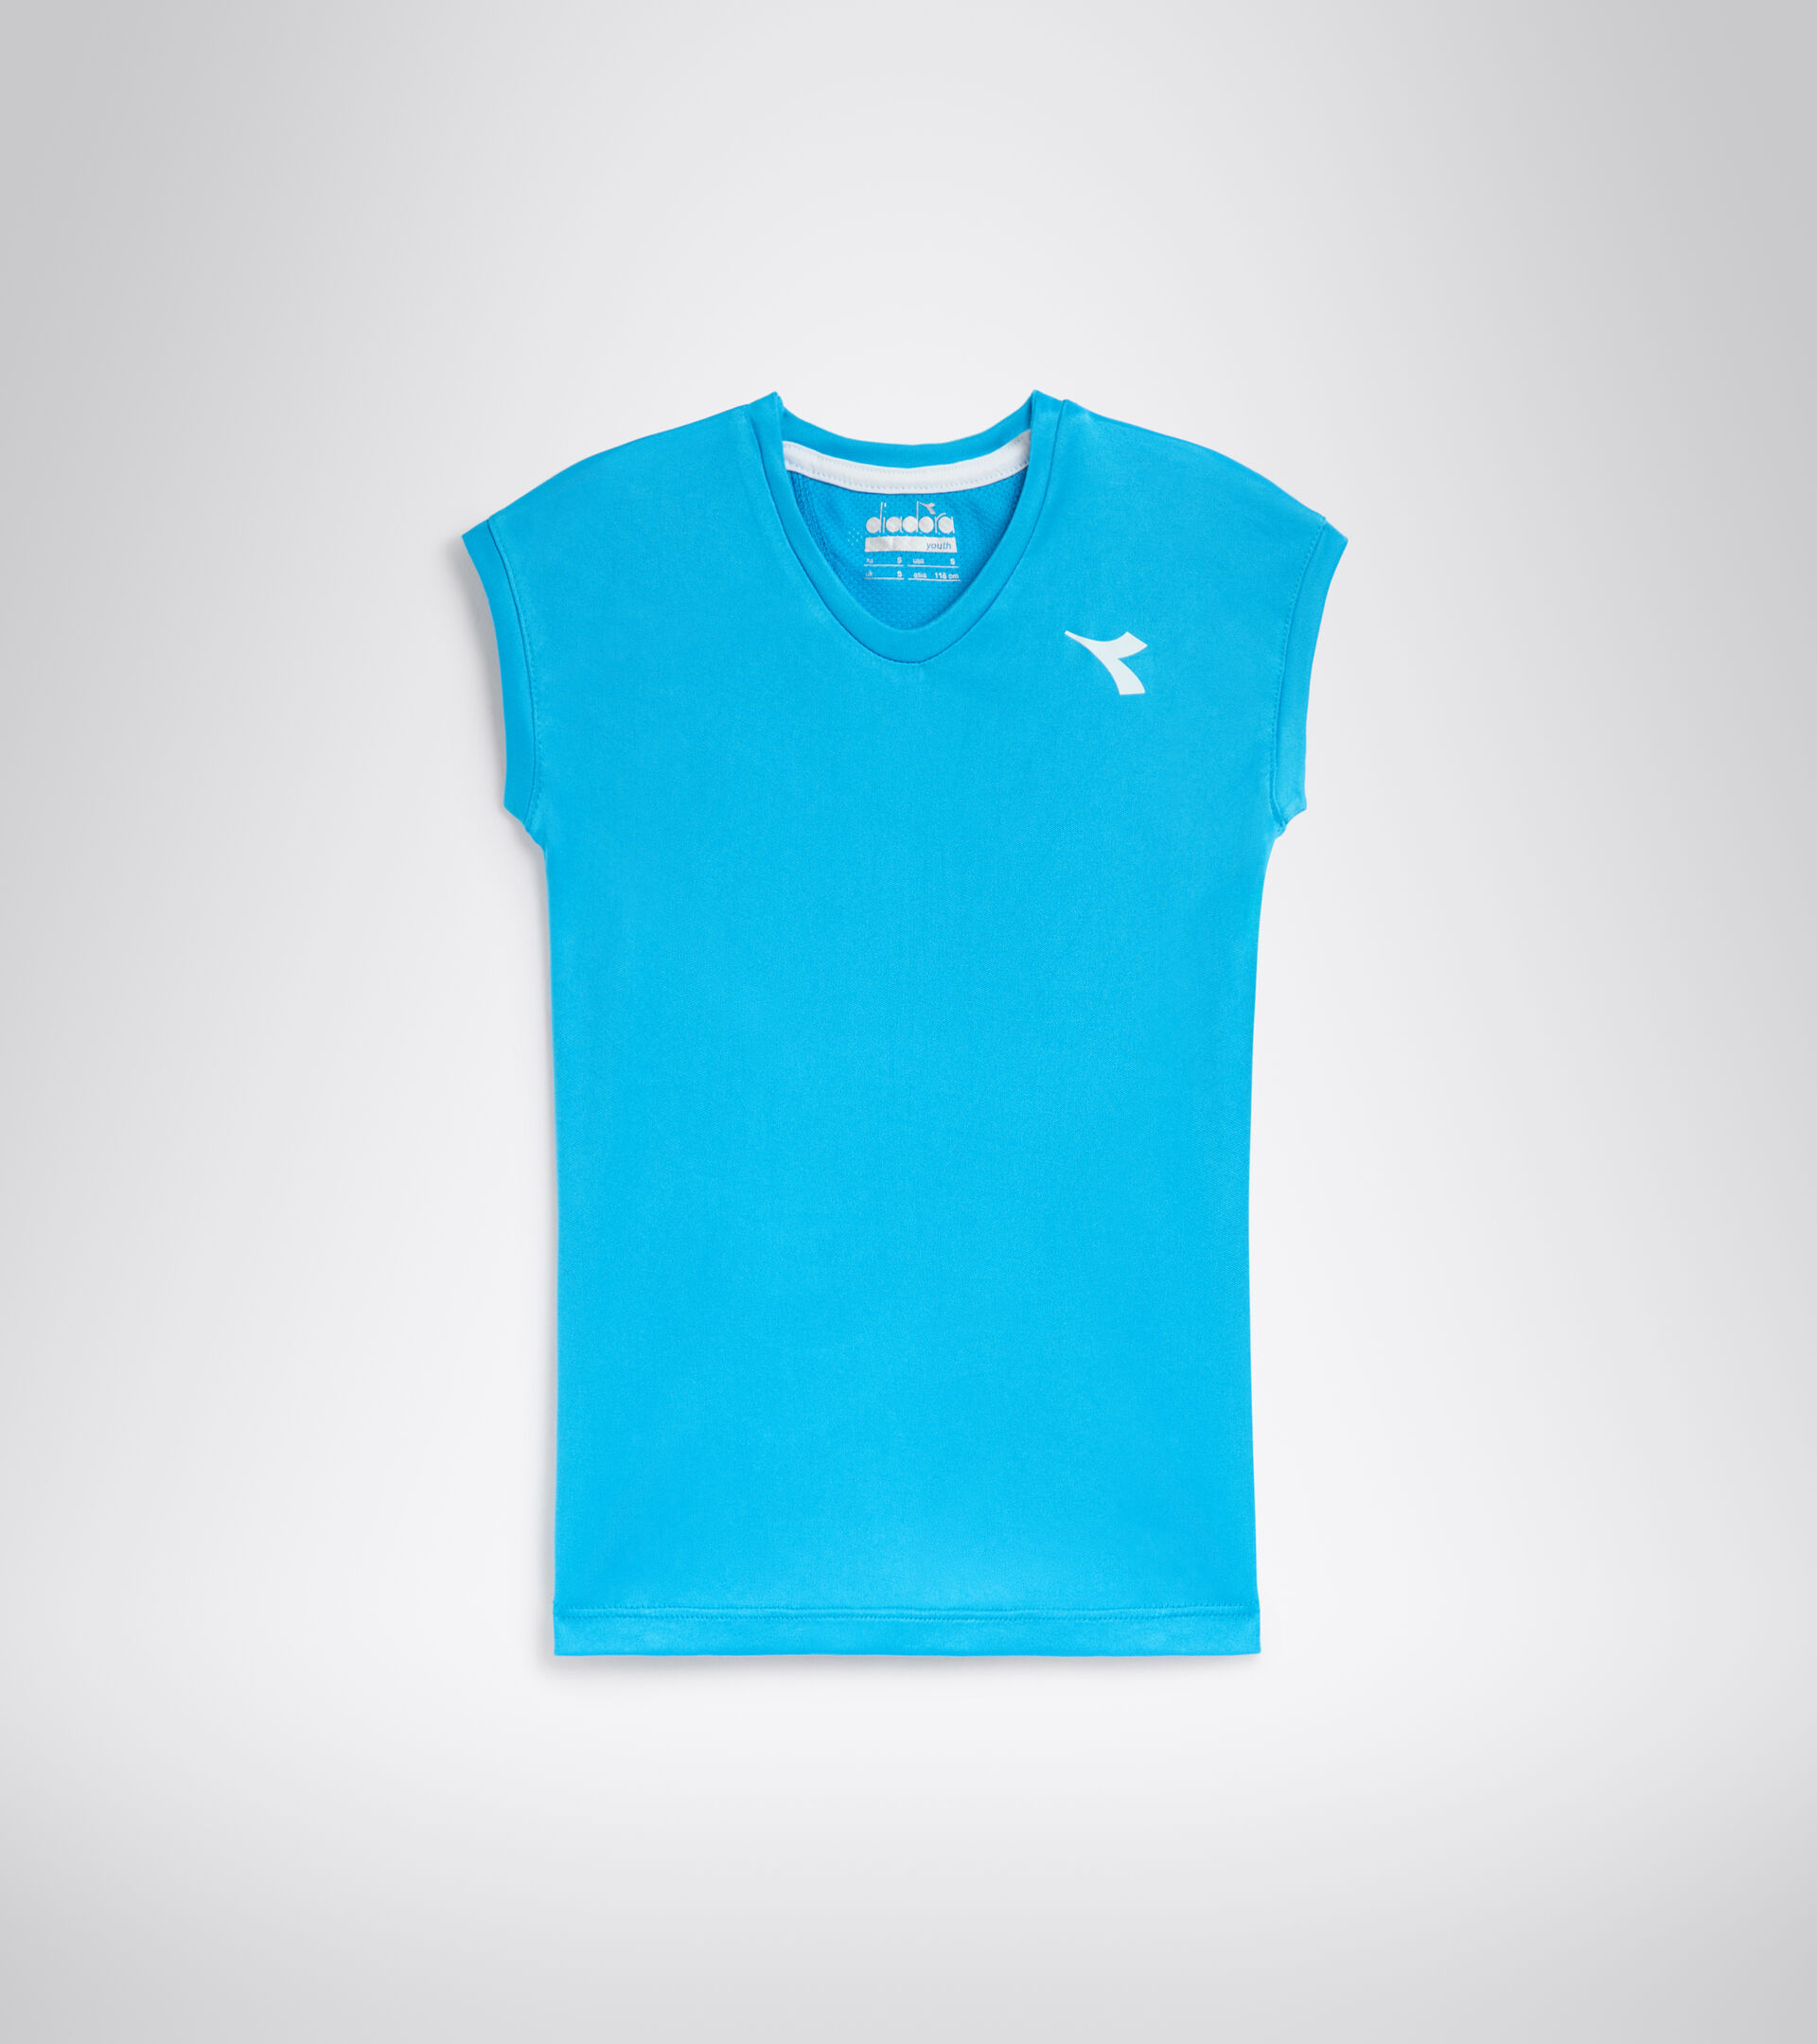 Tennis T-shirt - Junior G. T-SHIRT TEAM ROYAL FLUO - Diadora